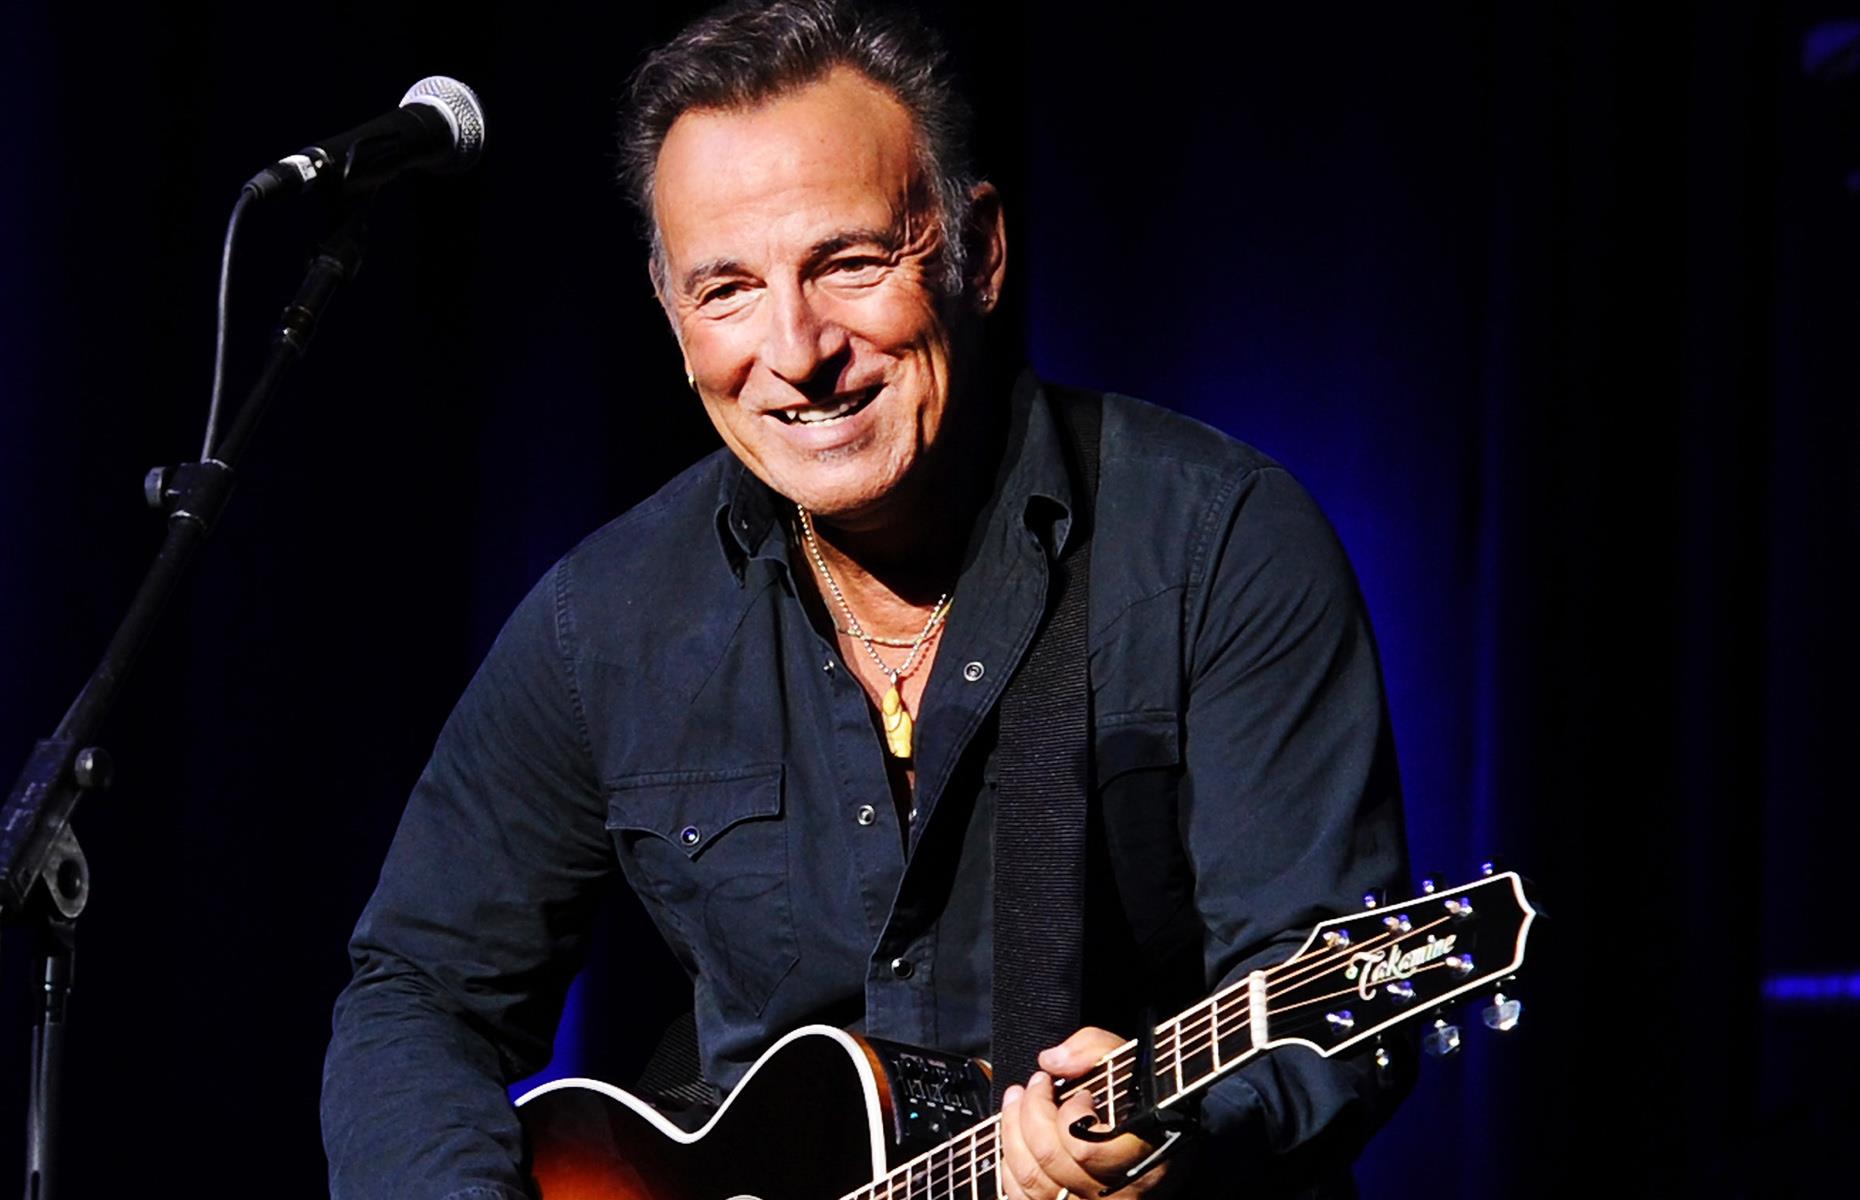 Bruce Springsteen facts: Singer's age, family, children, net worth